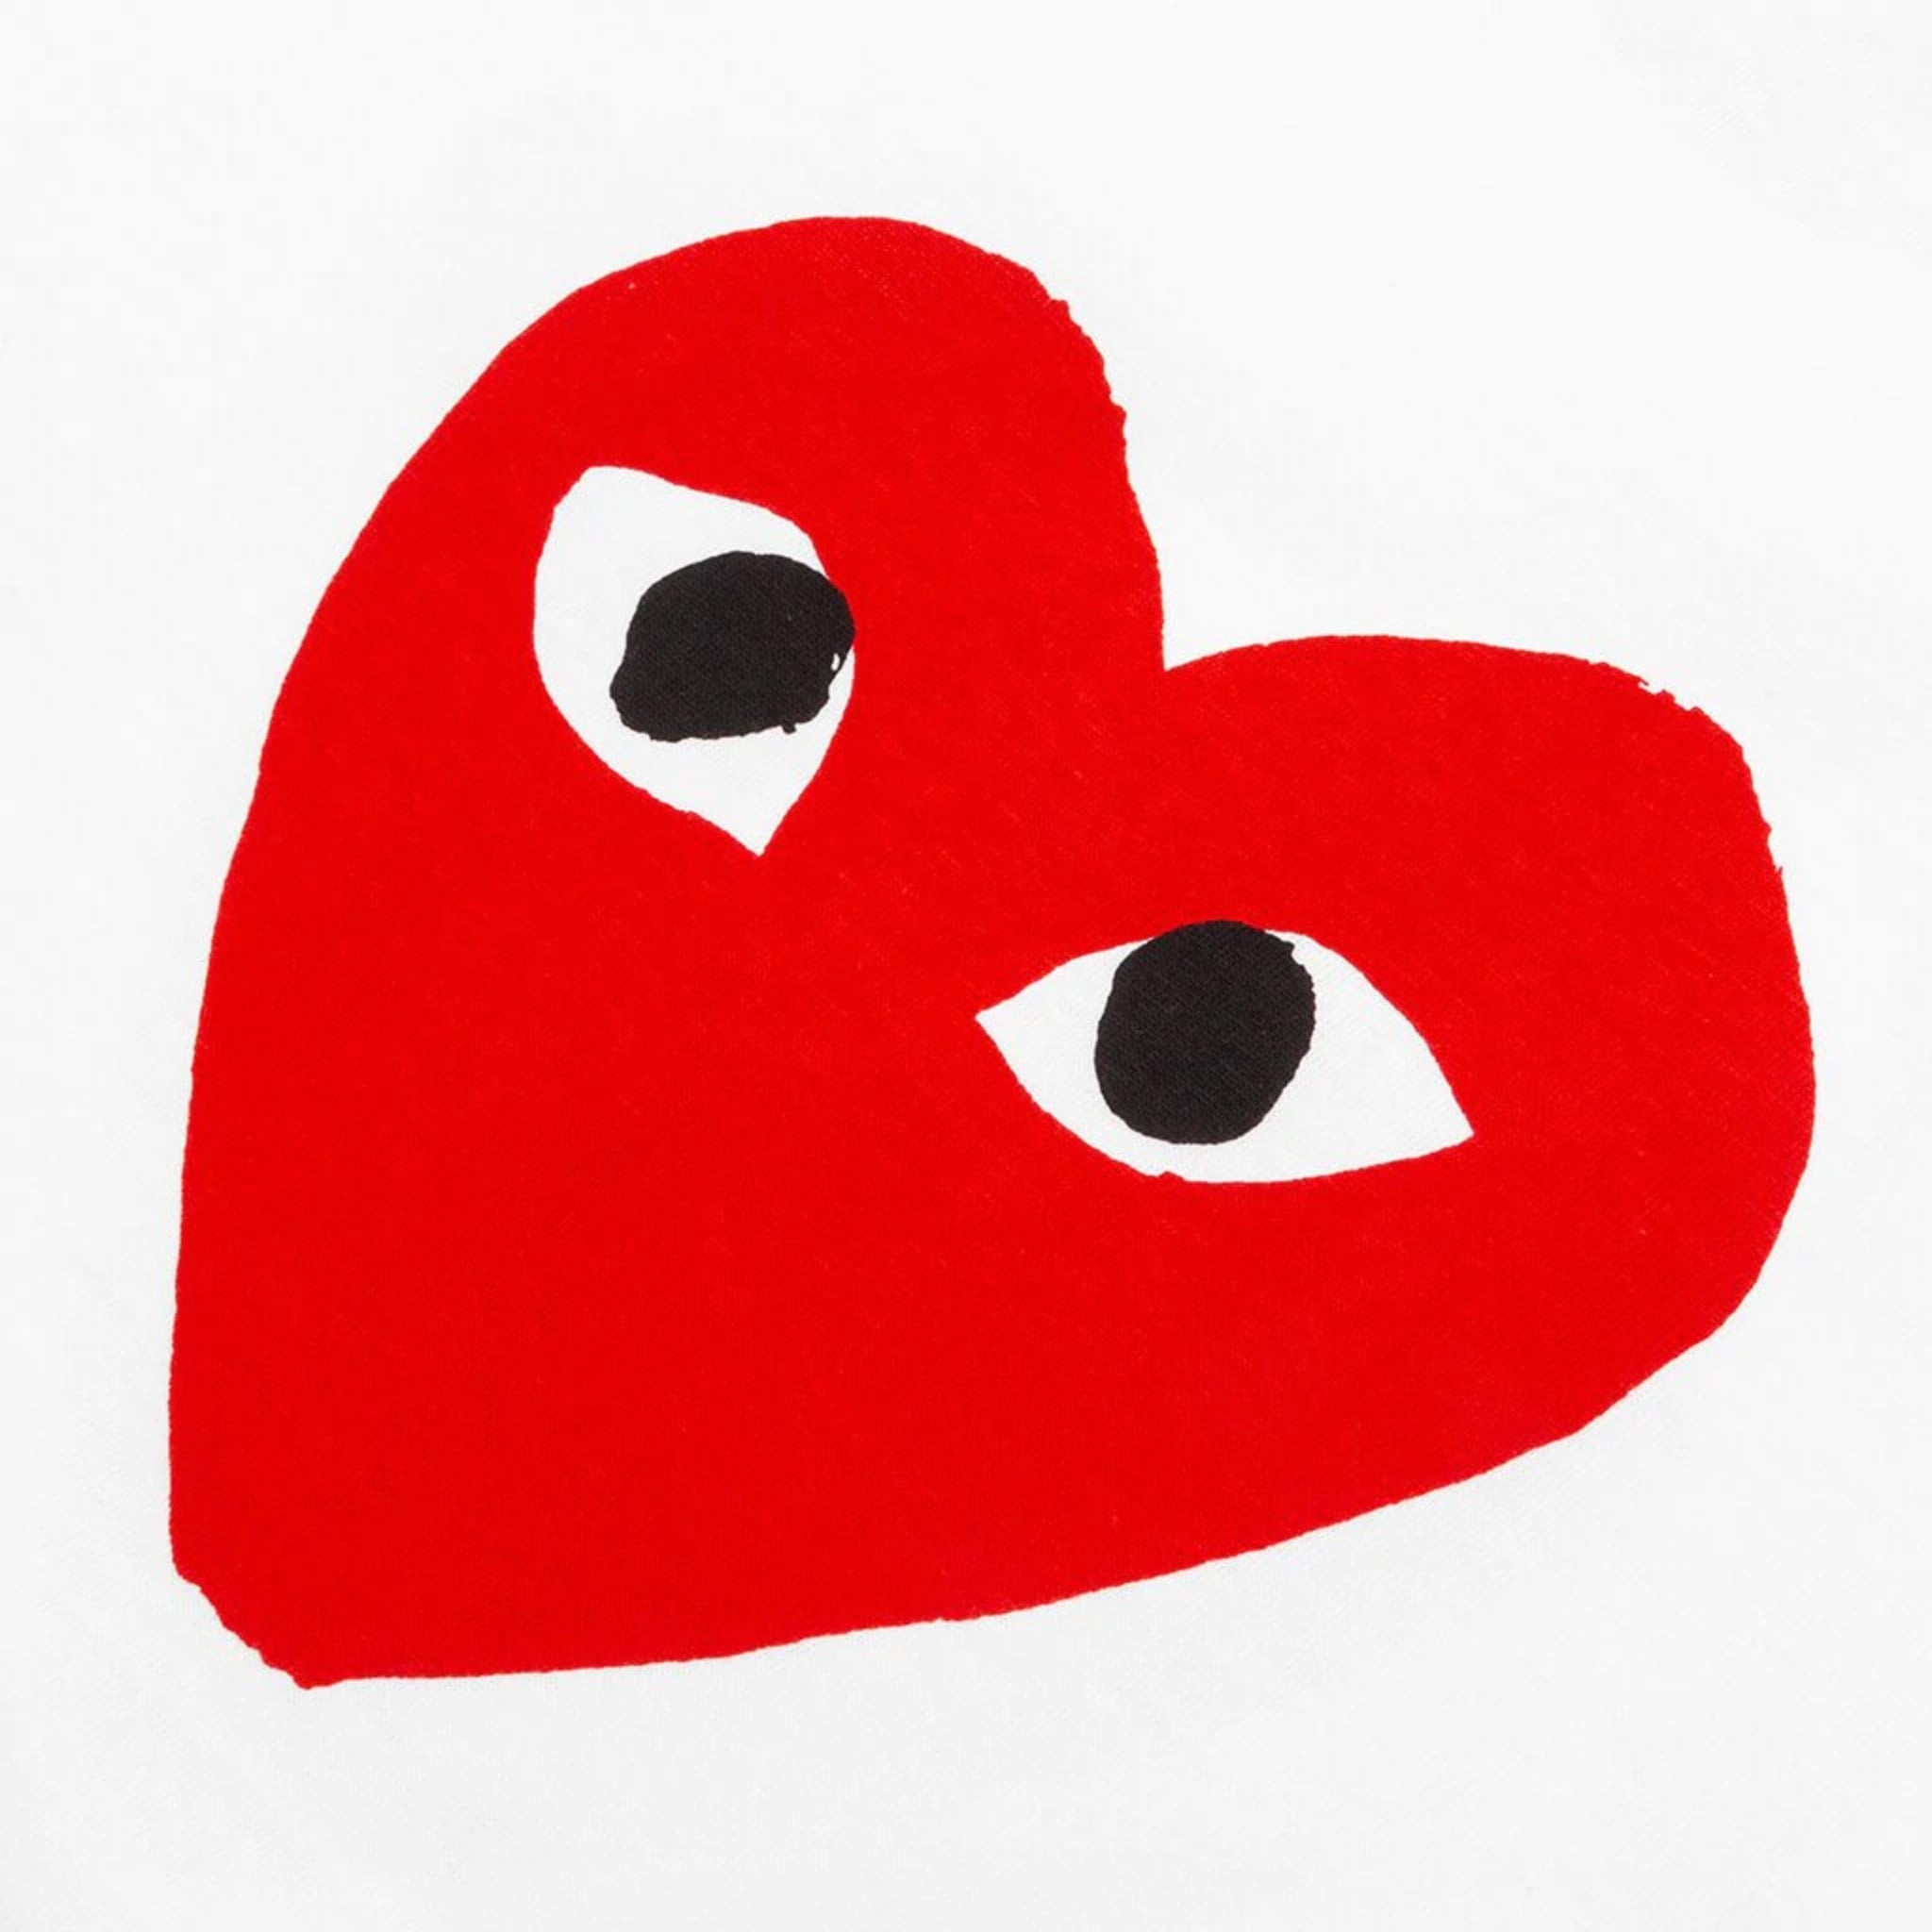 Comme des Garçons PLAY Red Heart T-Shirt (White) T222 - August Shop